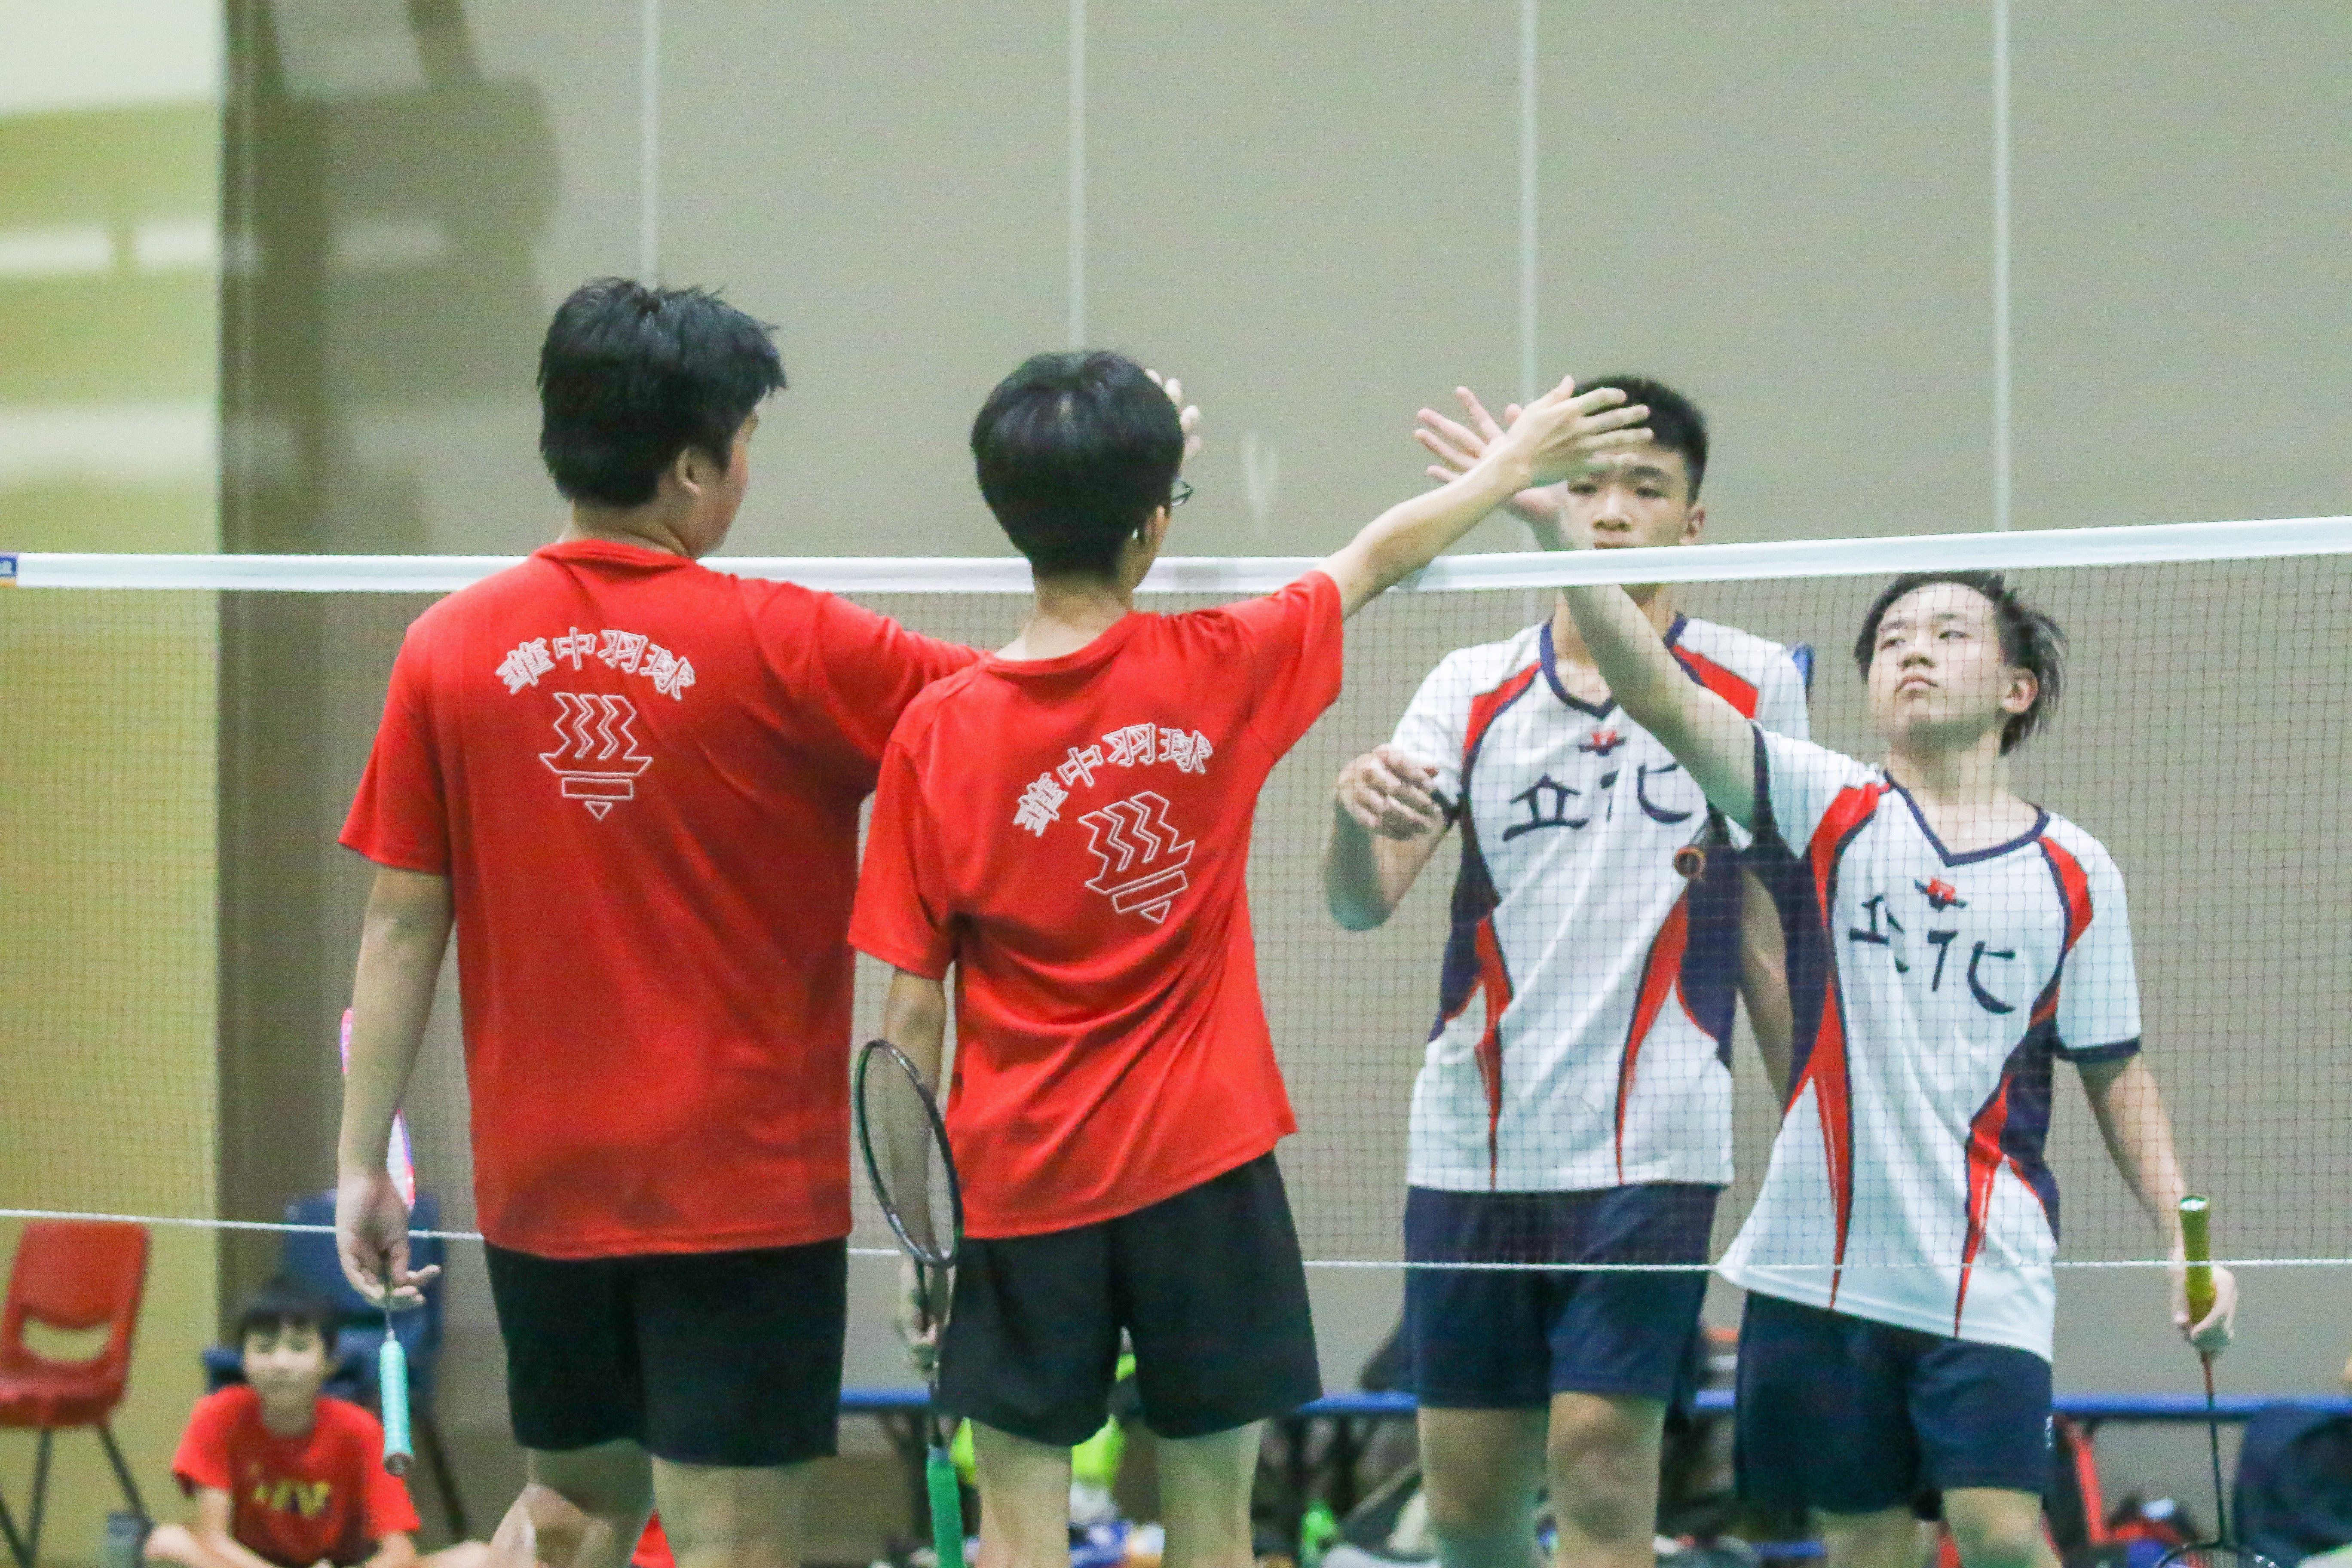 2023-05-17_Badminton_By Chin KK_IFP_1903_edited